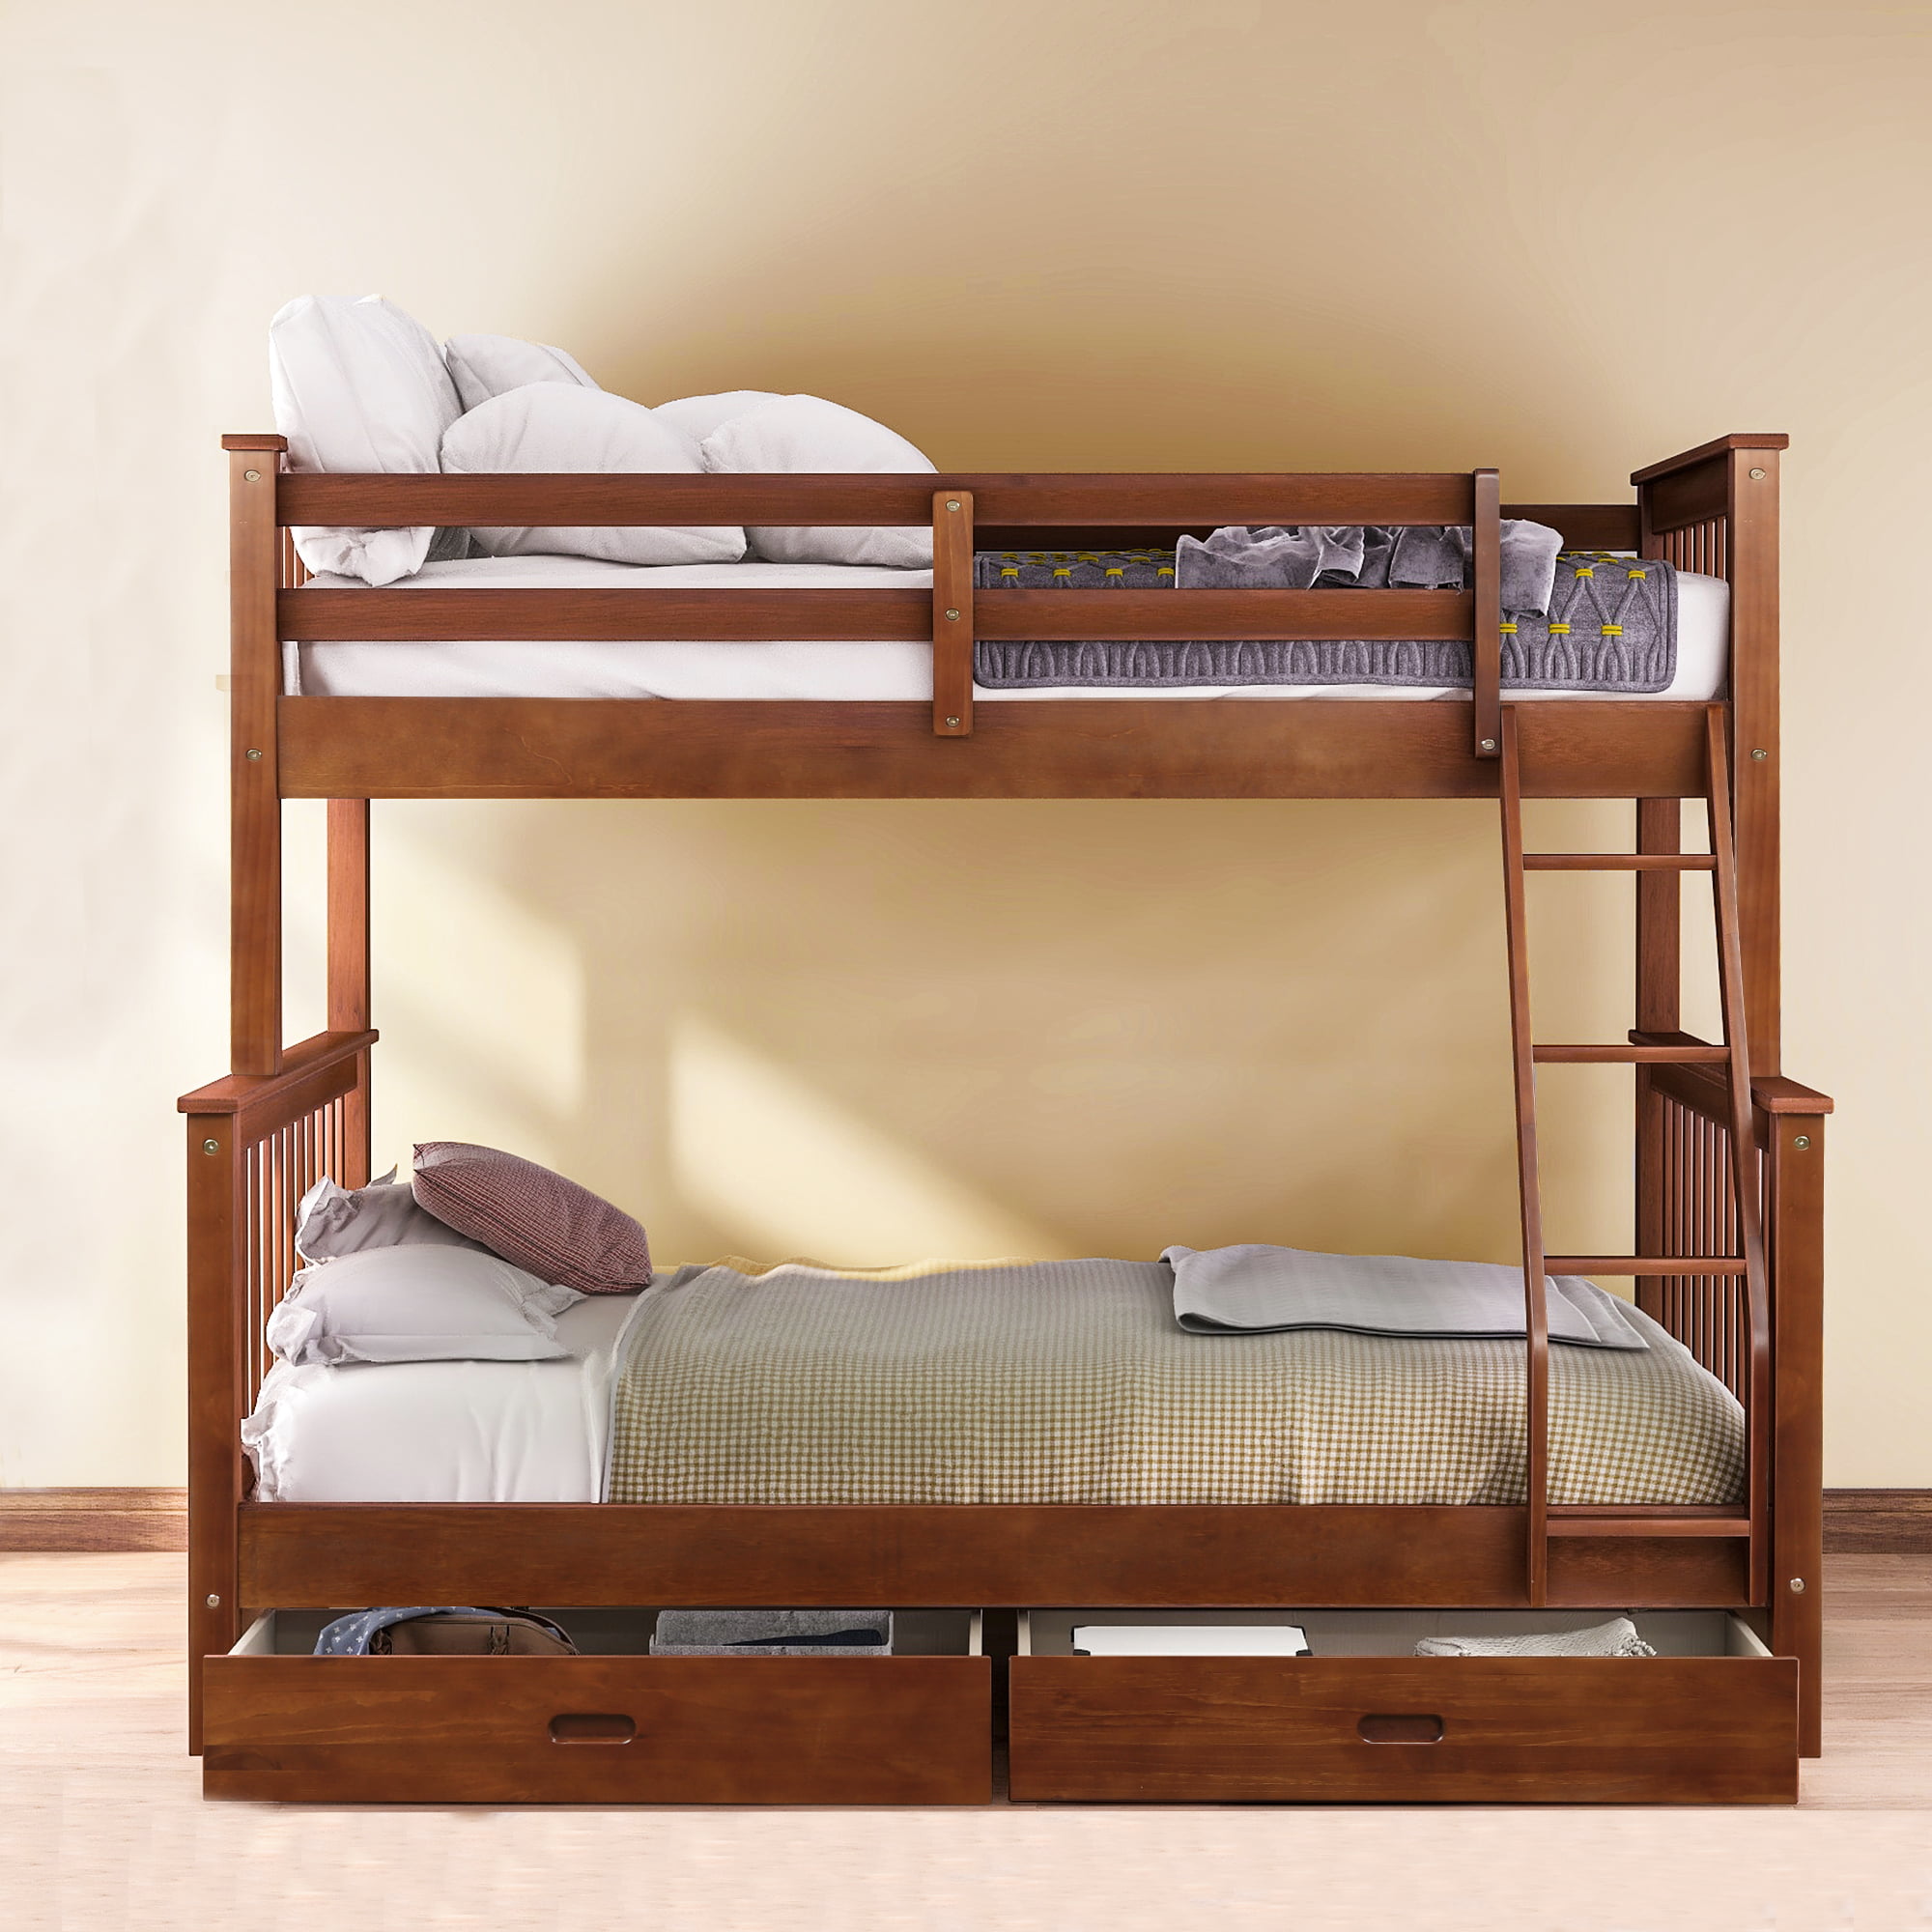 childrens wooden bunk beds